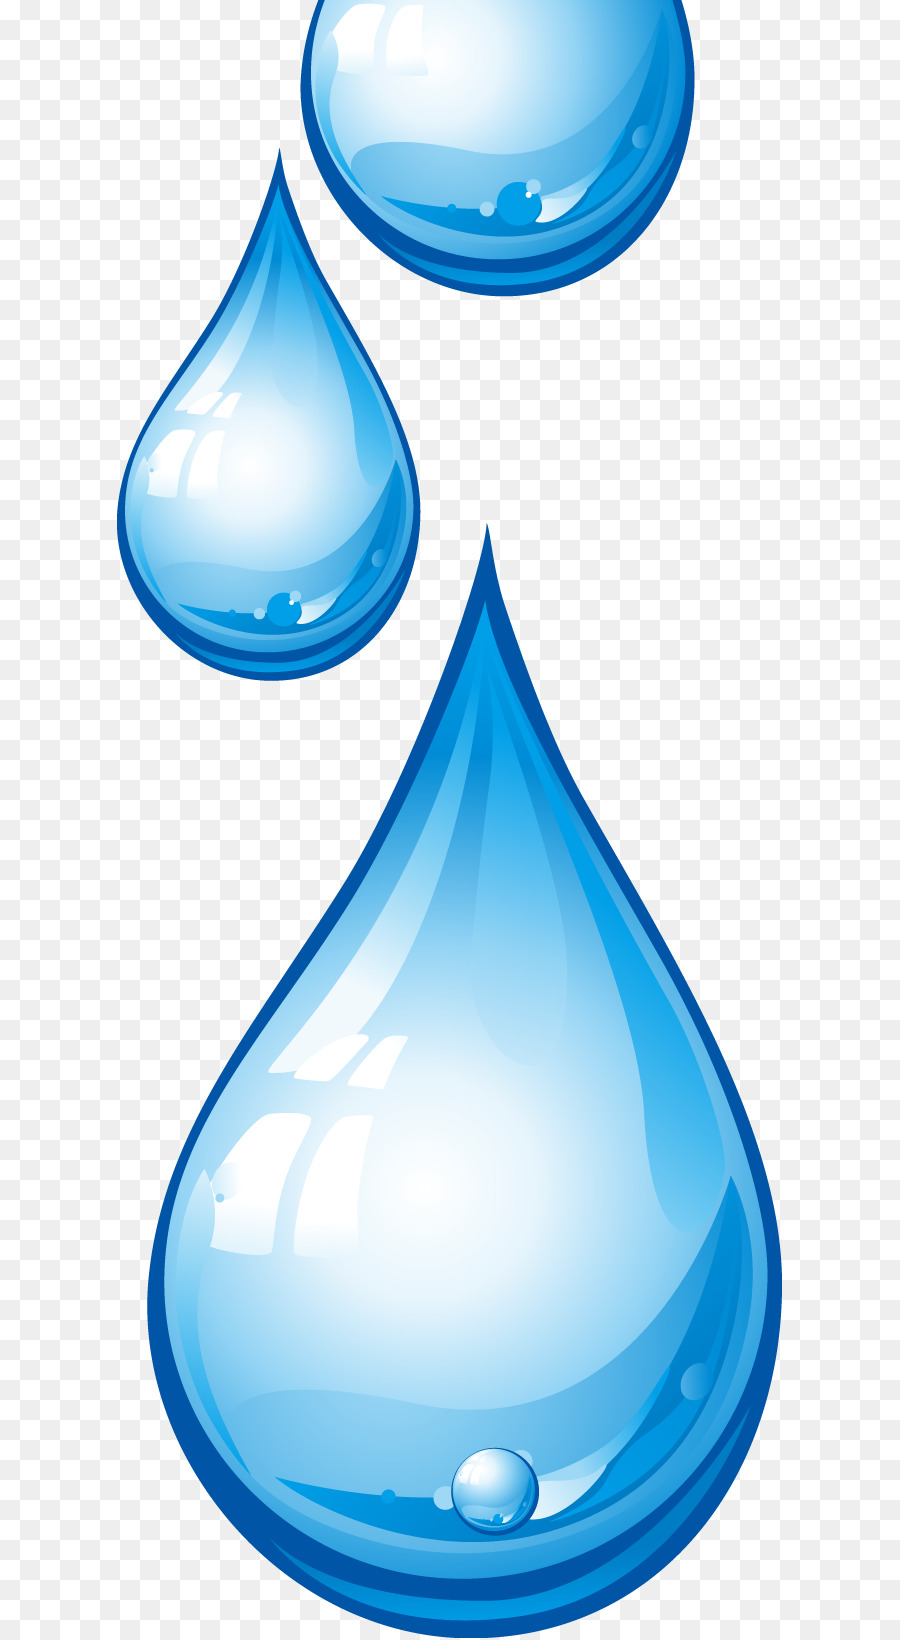 Drop Water Euclidean vector - Fine drops of water droplets png download - 665*1638 - Free Transparent Drop png Download.